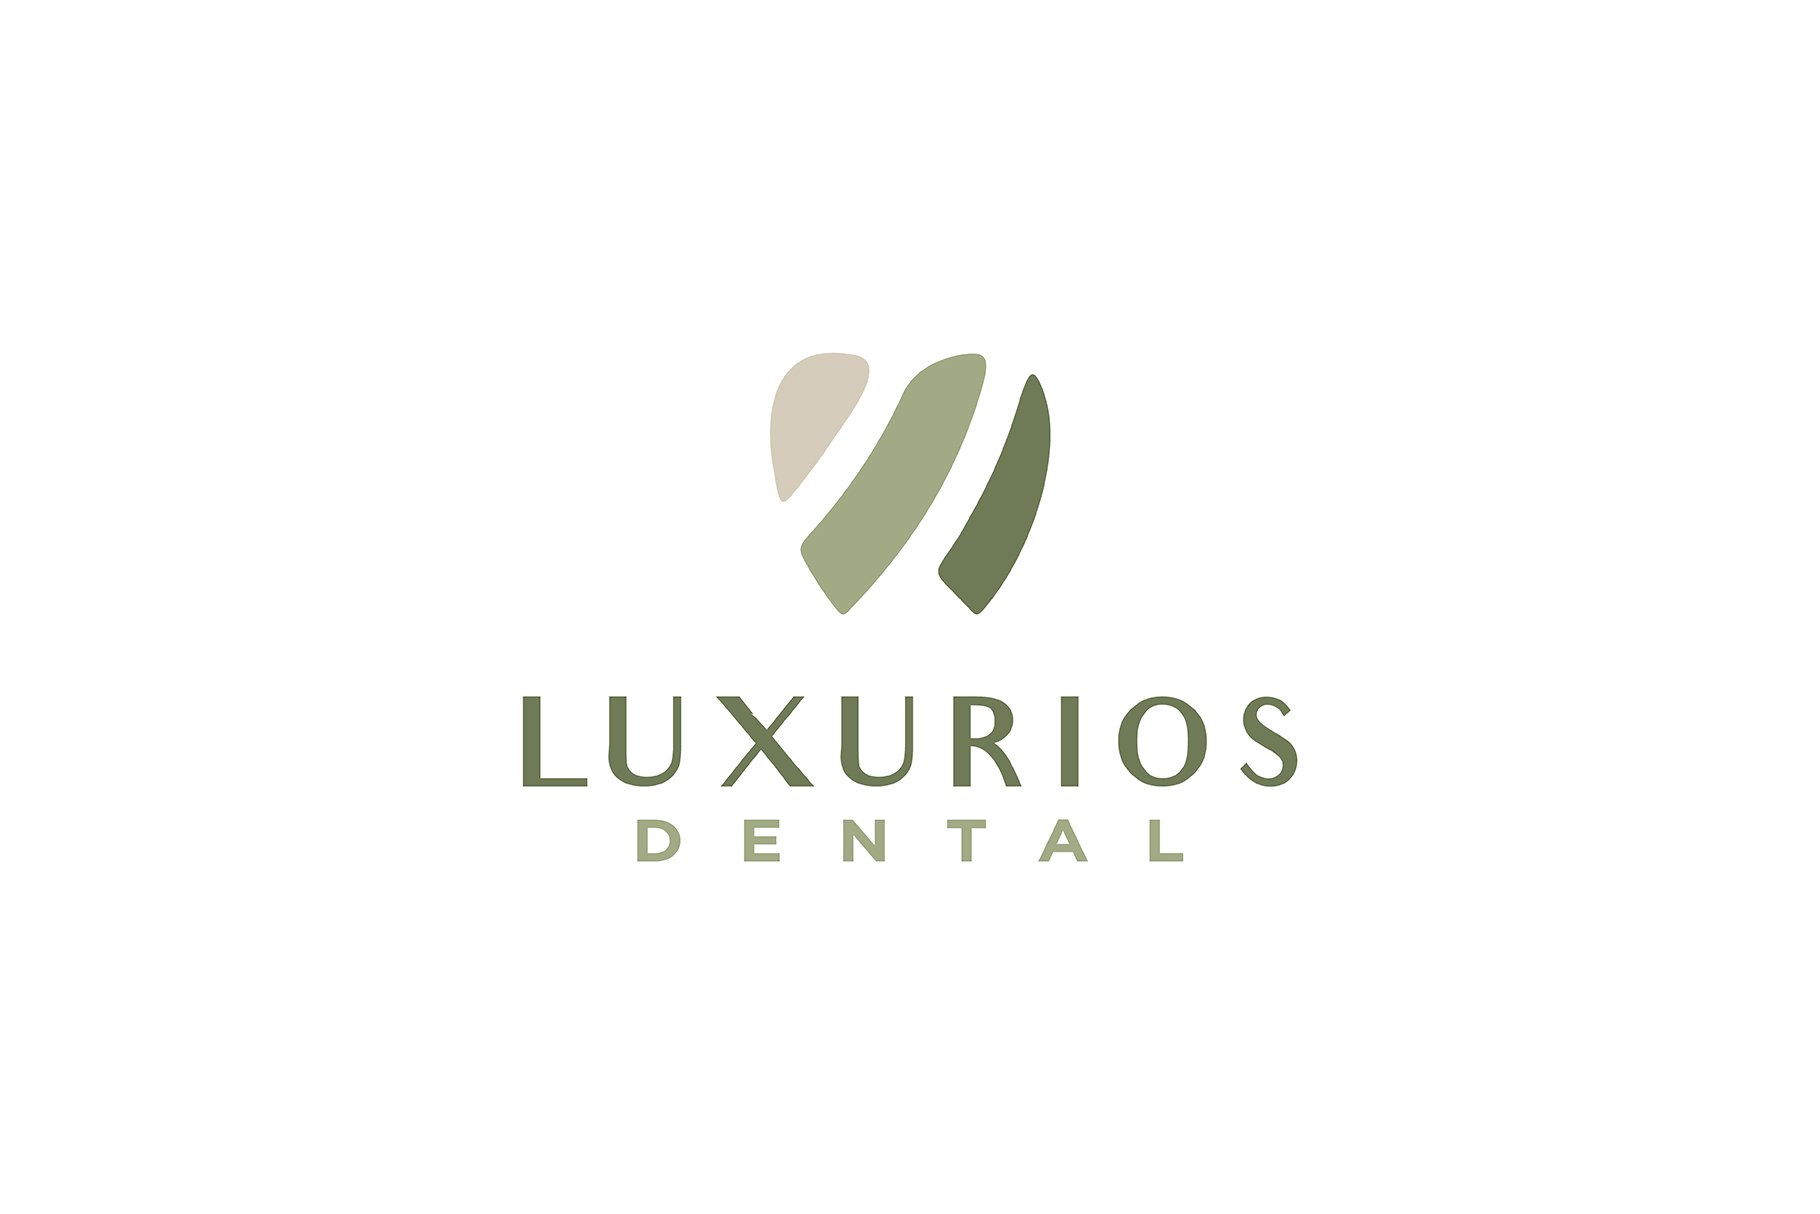 luxury dental logo design Template cover image.